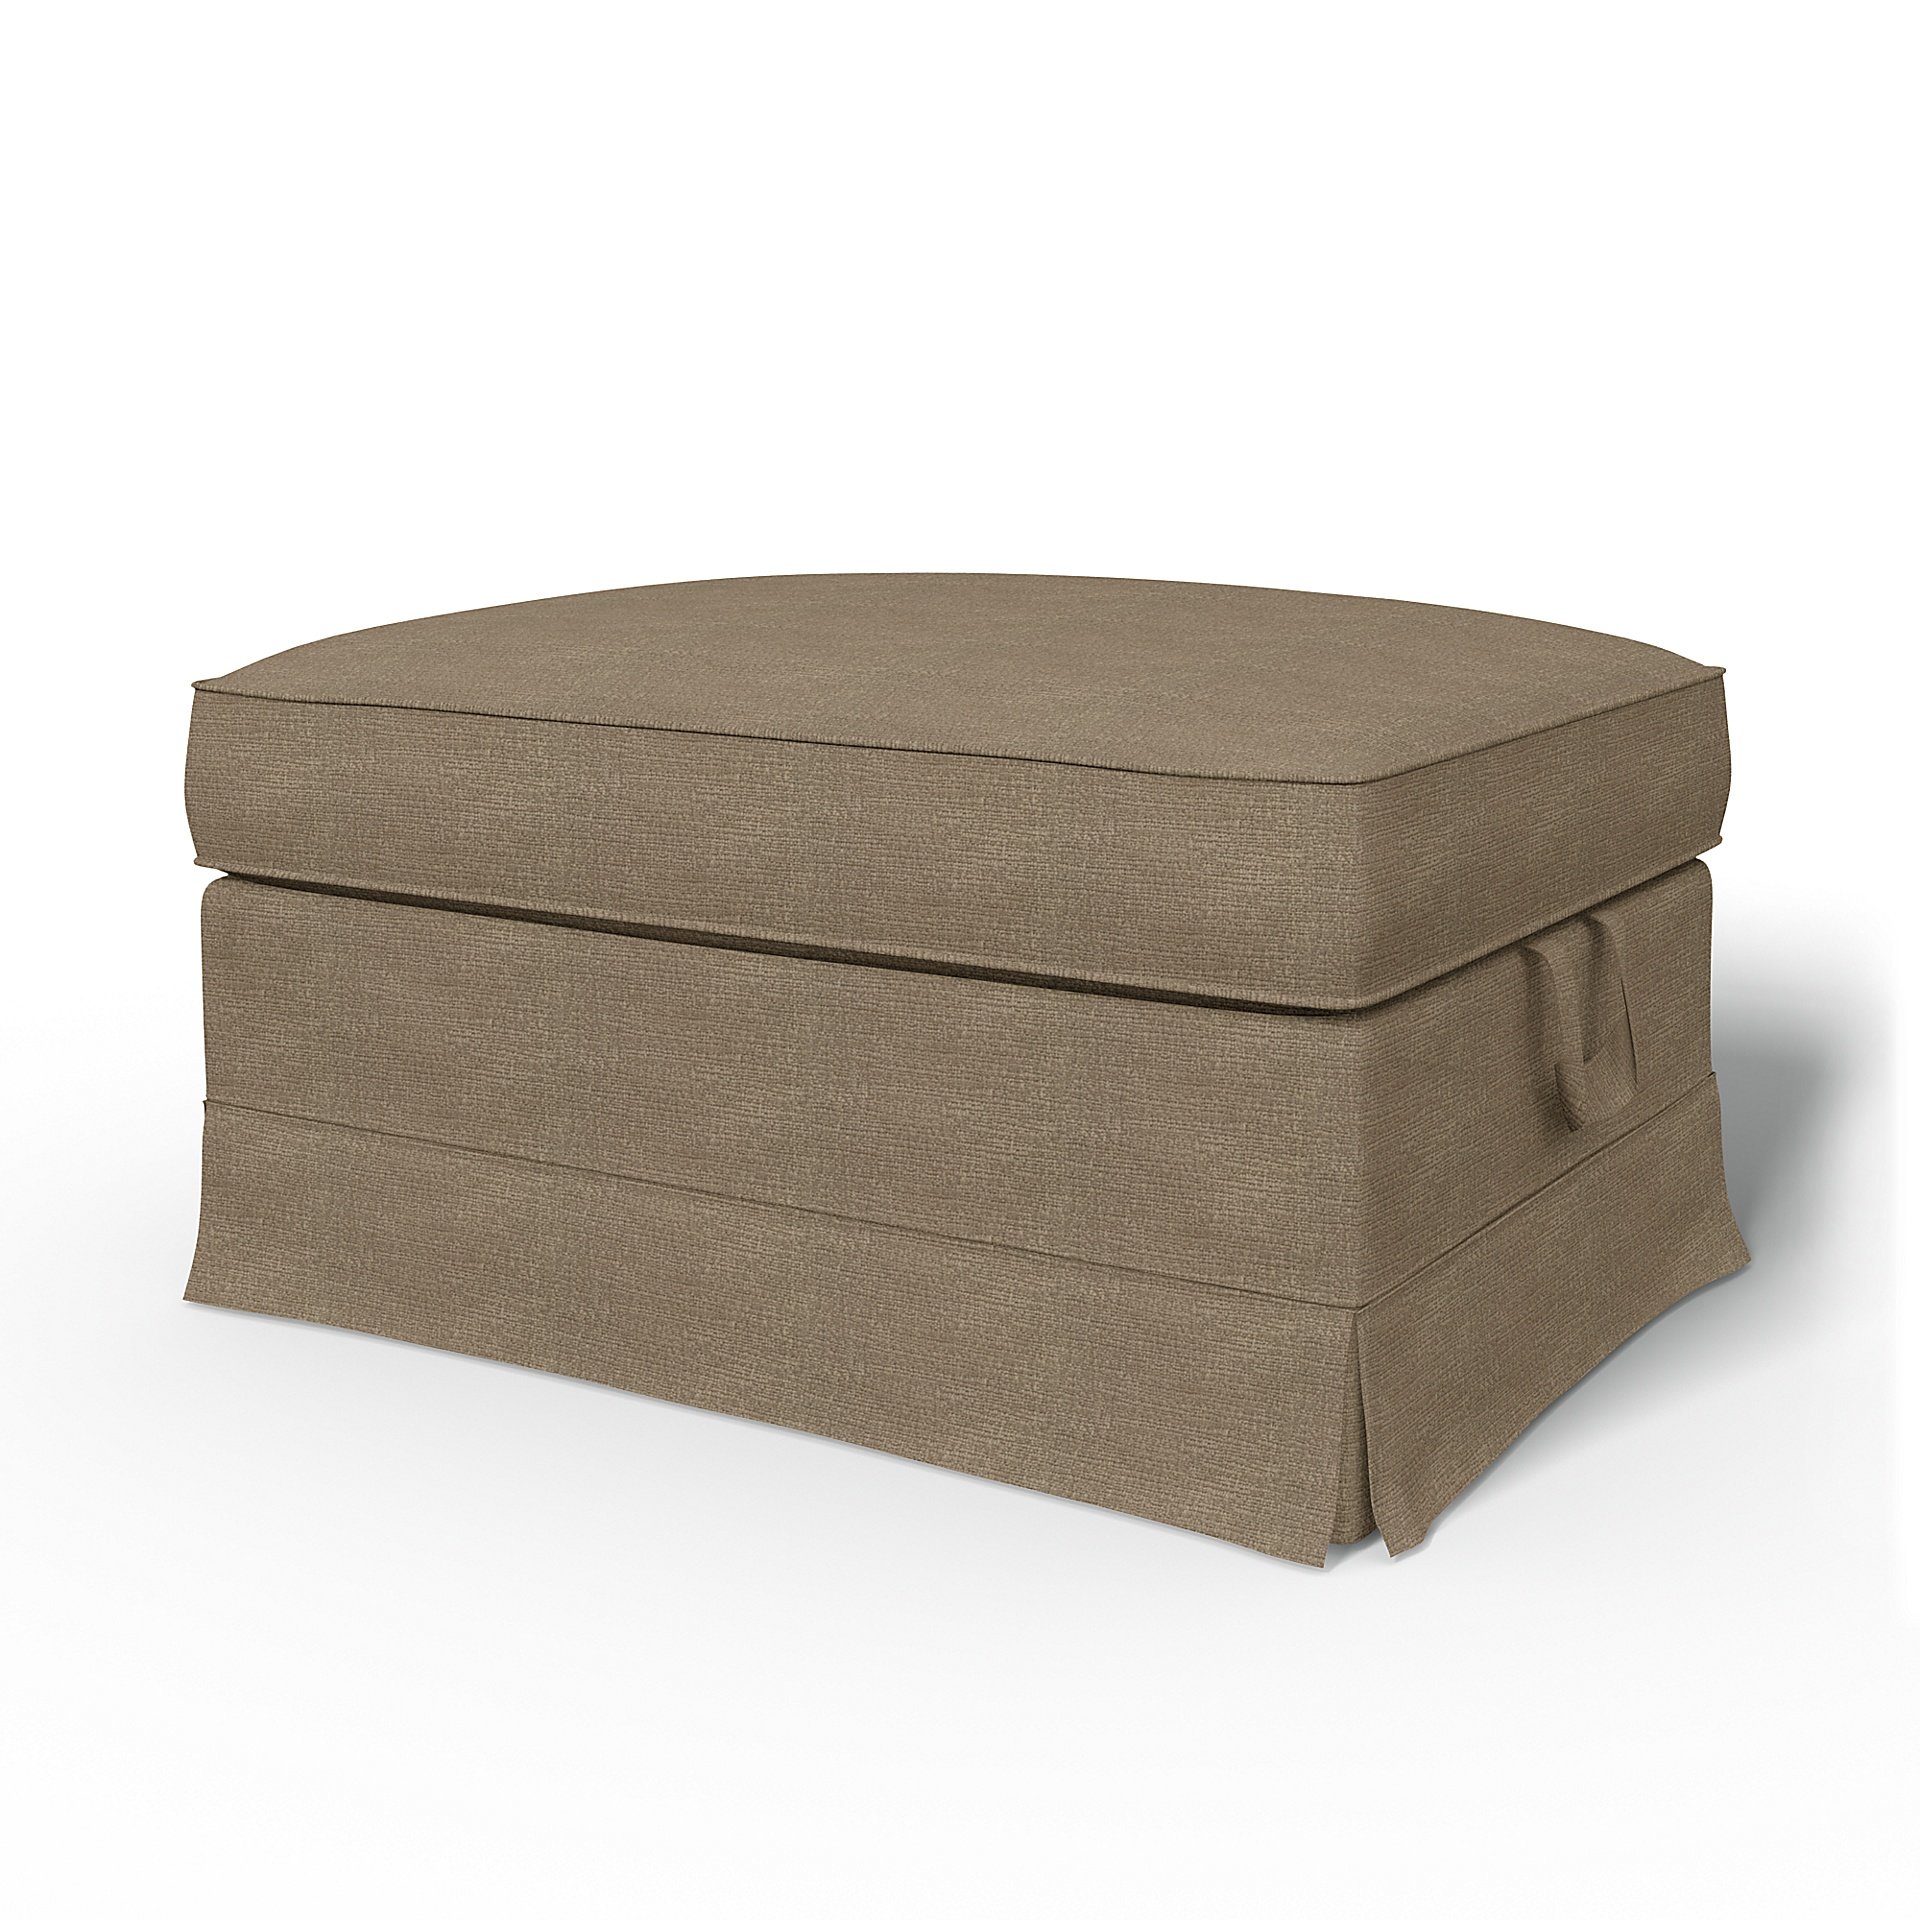 IKEA - Ektorp Footstool Cover, Camel, Boucle & Texture - Bemz